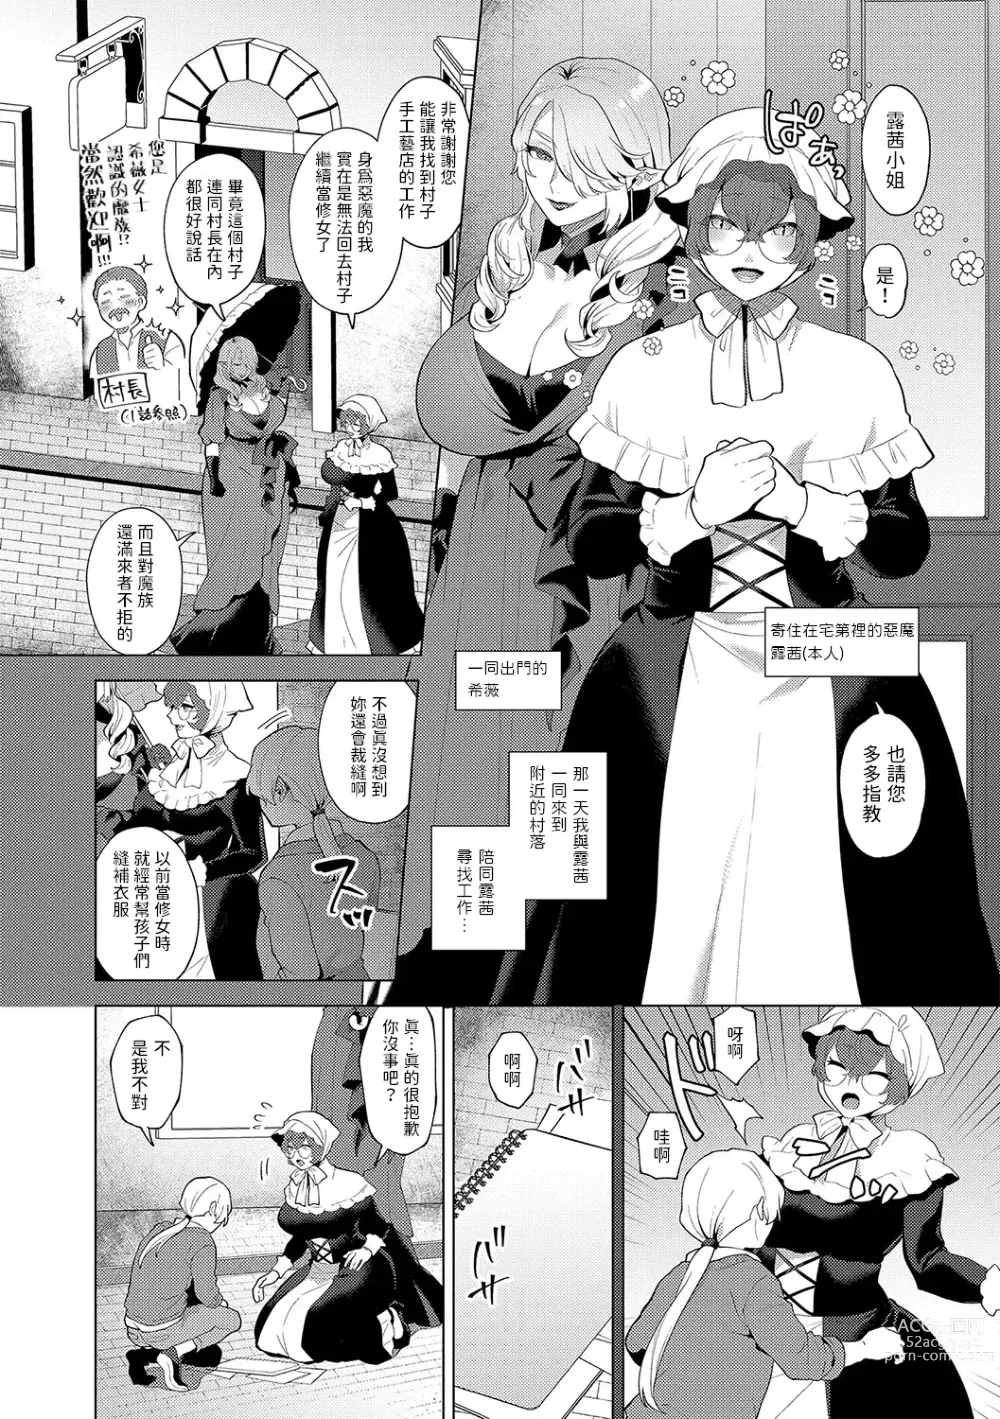 Page 4 of manga Reventlow-jou no Joukou Jikenbo Ch. 6